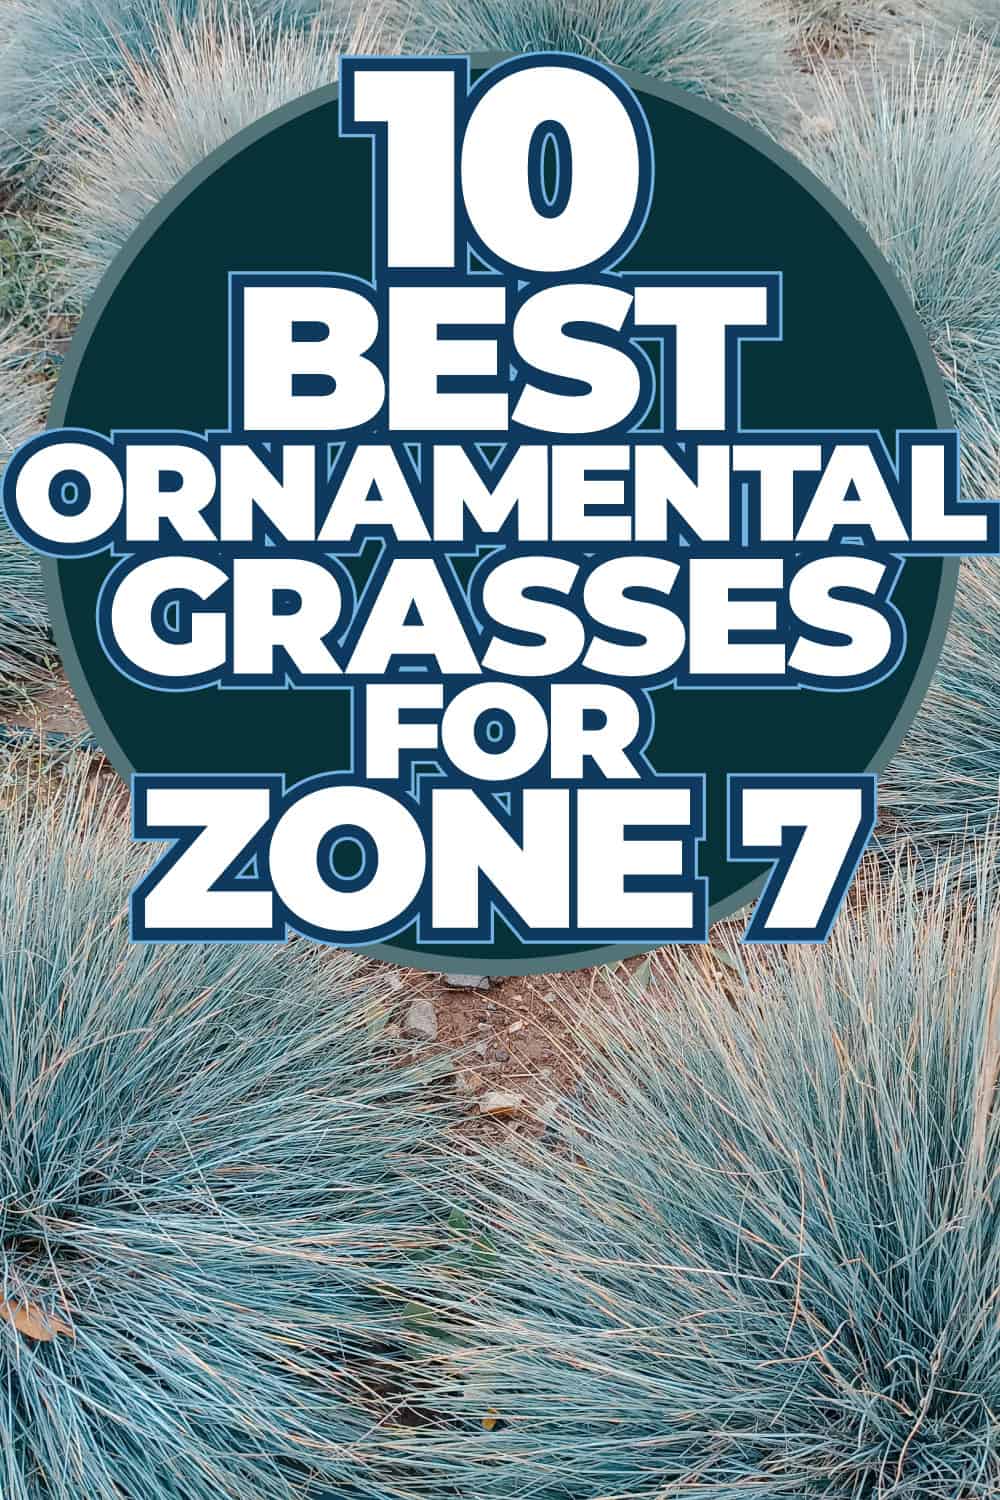 10 Best Ornamental Grasses for Zone 7